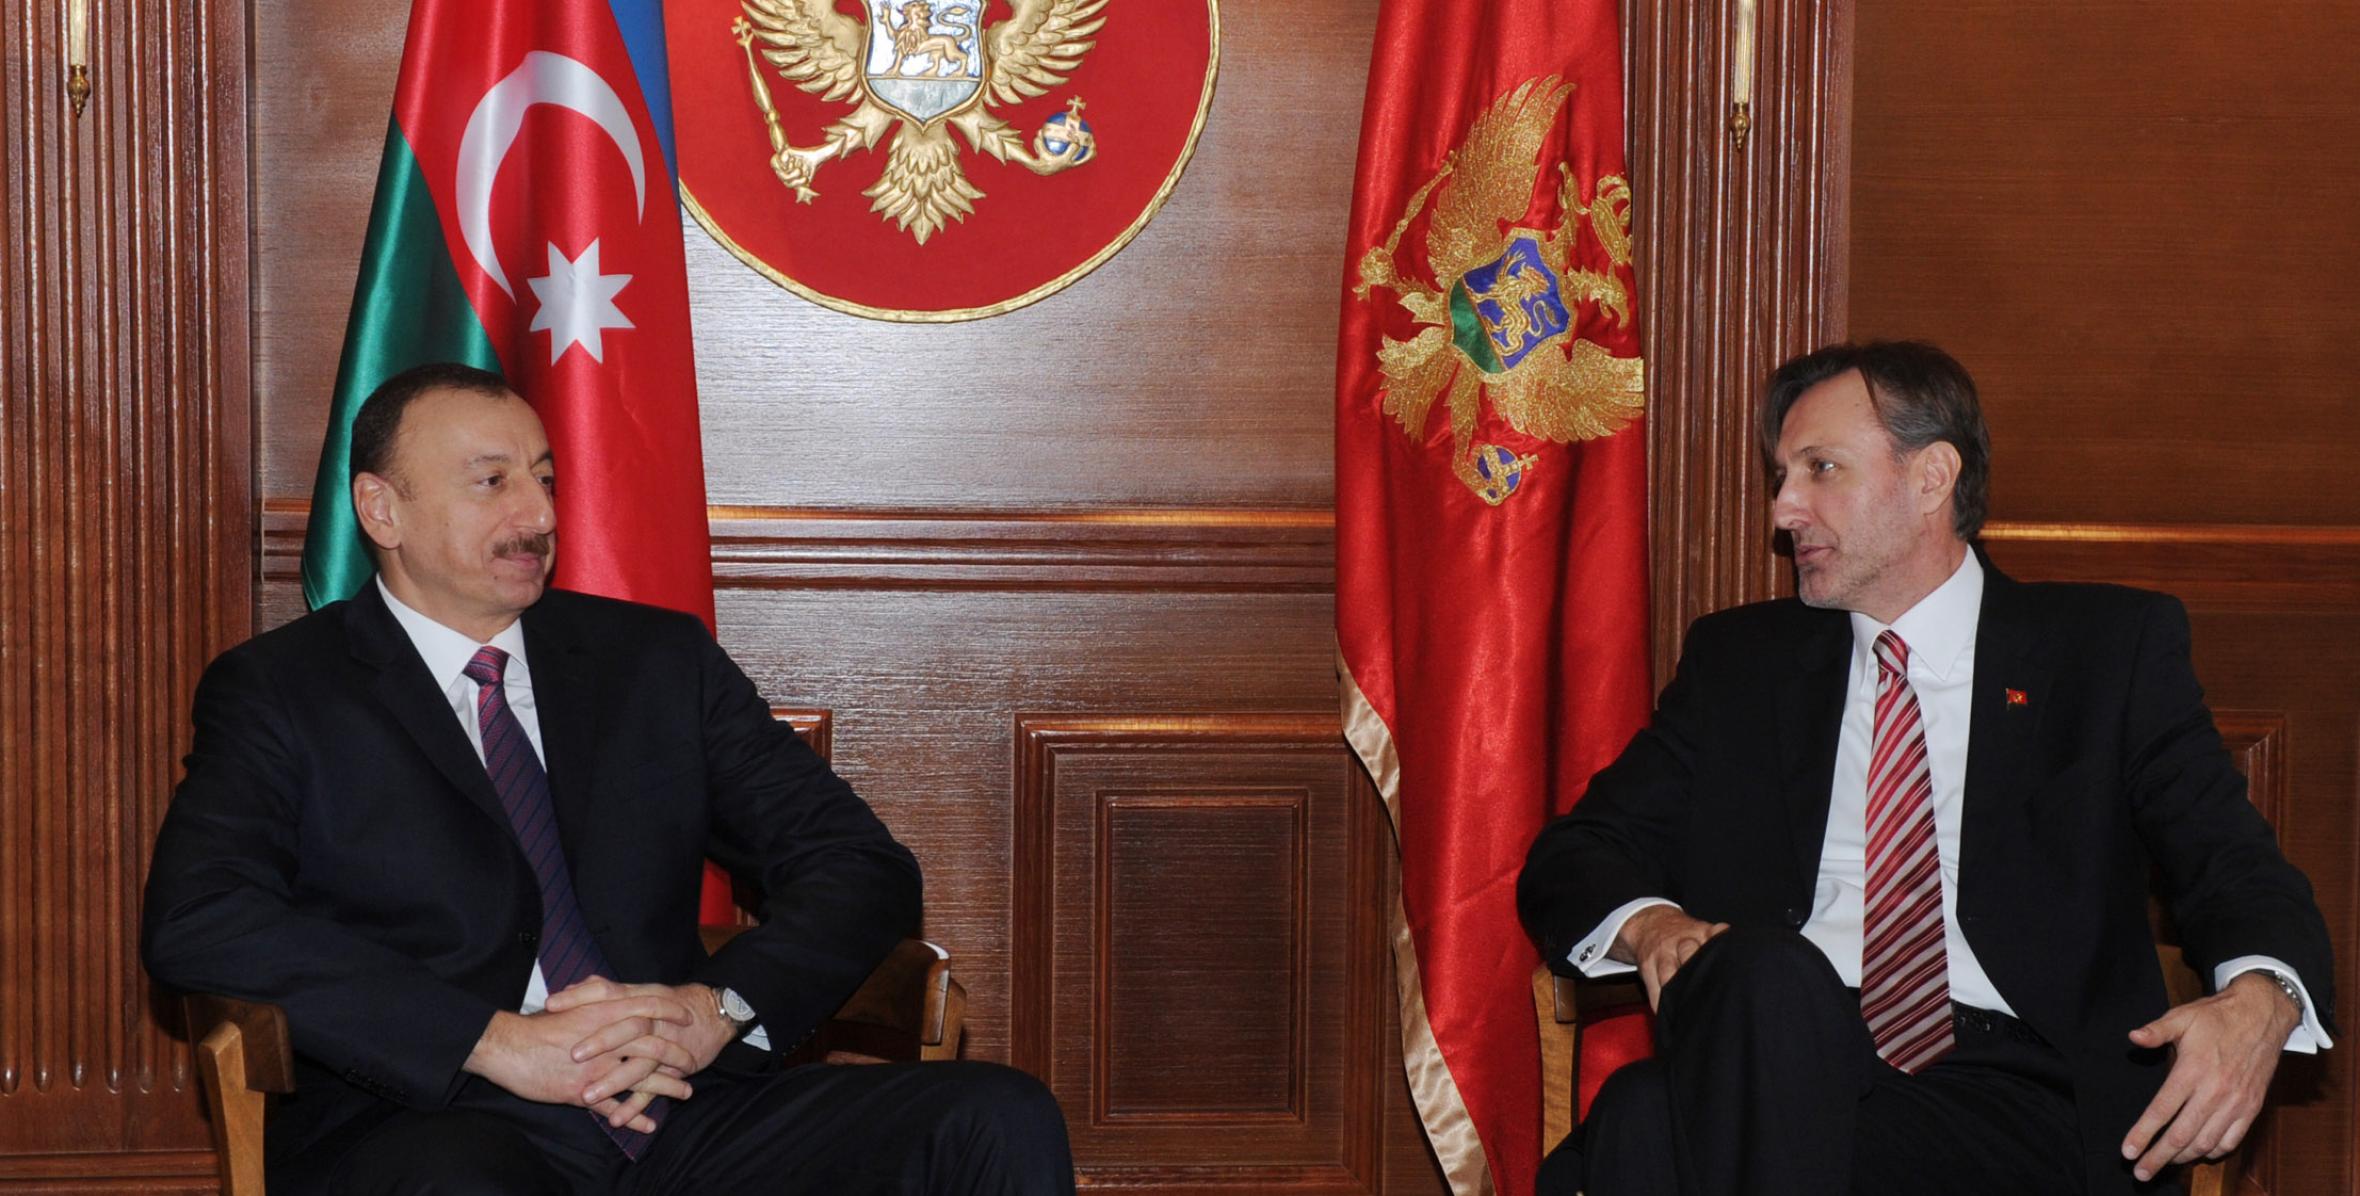 Ilham Aliyev met with Montenegro’s Parliament Speaker Ranko Krivokapic